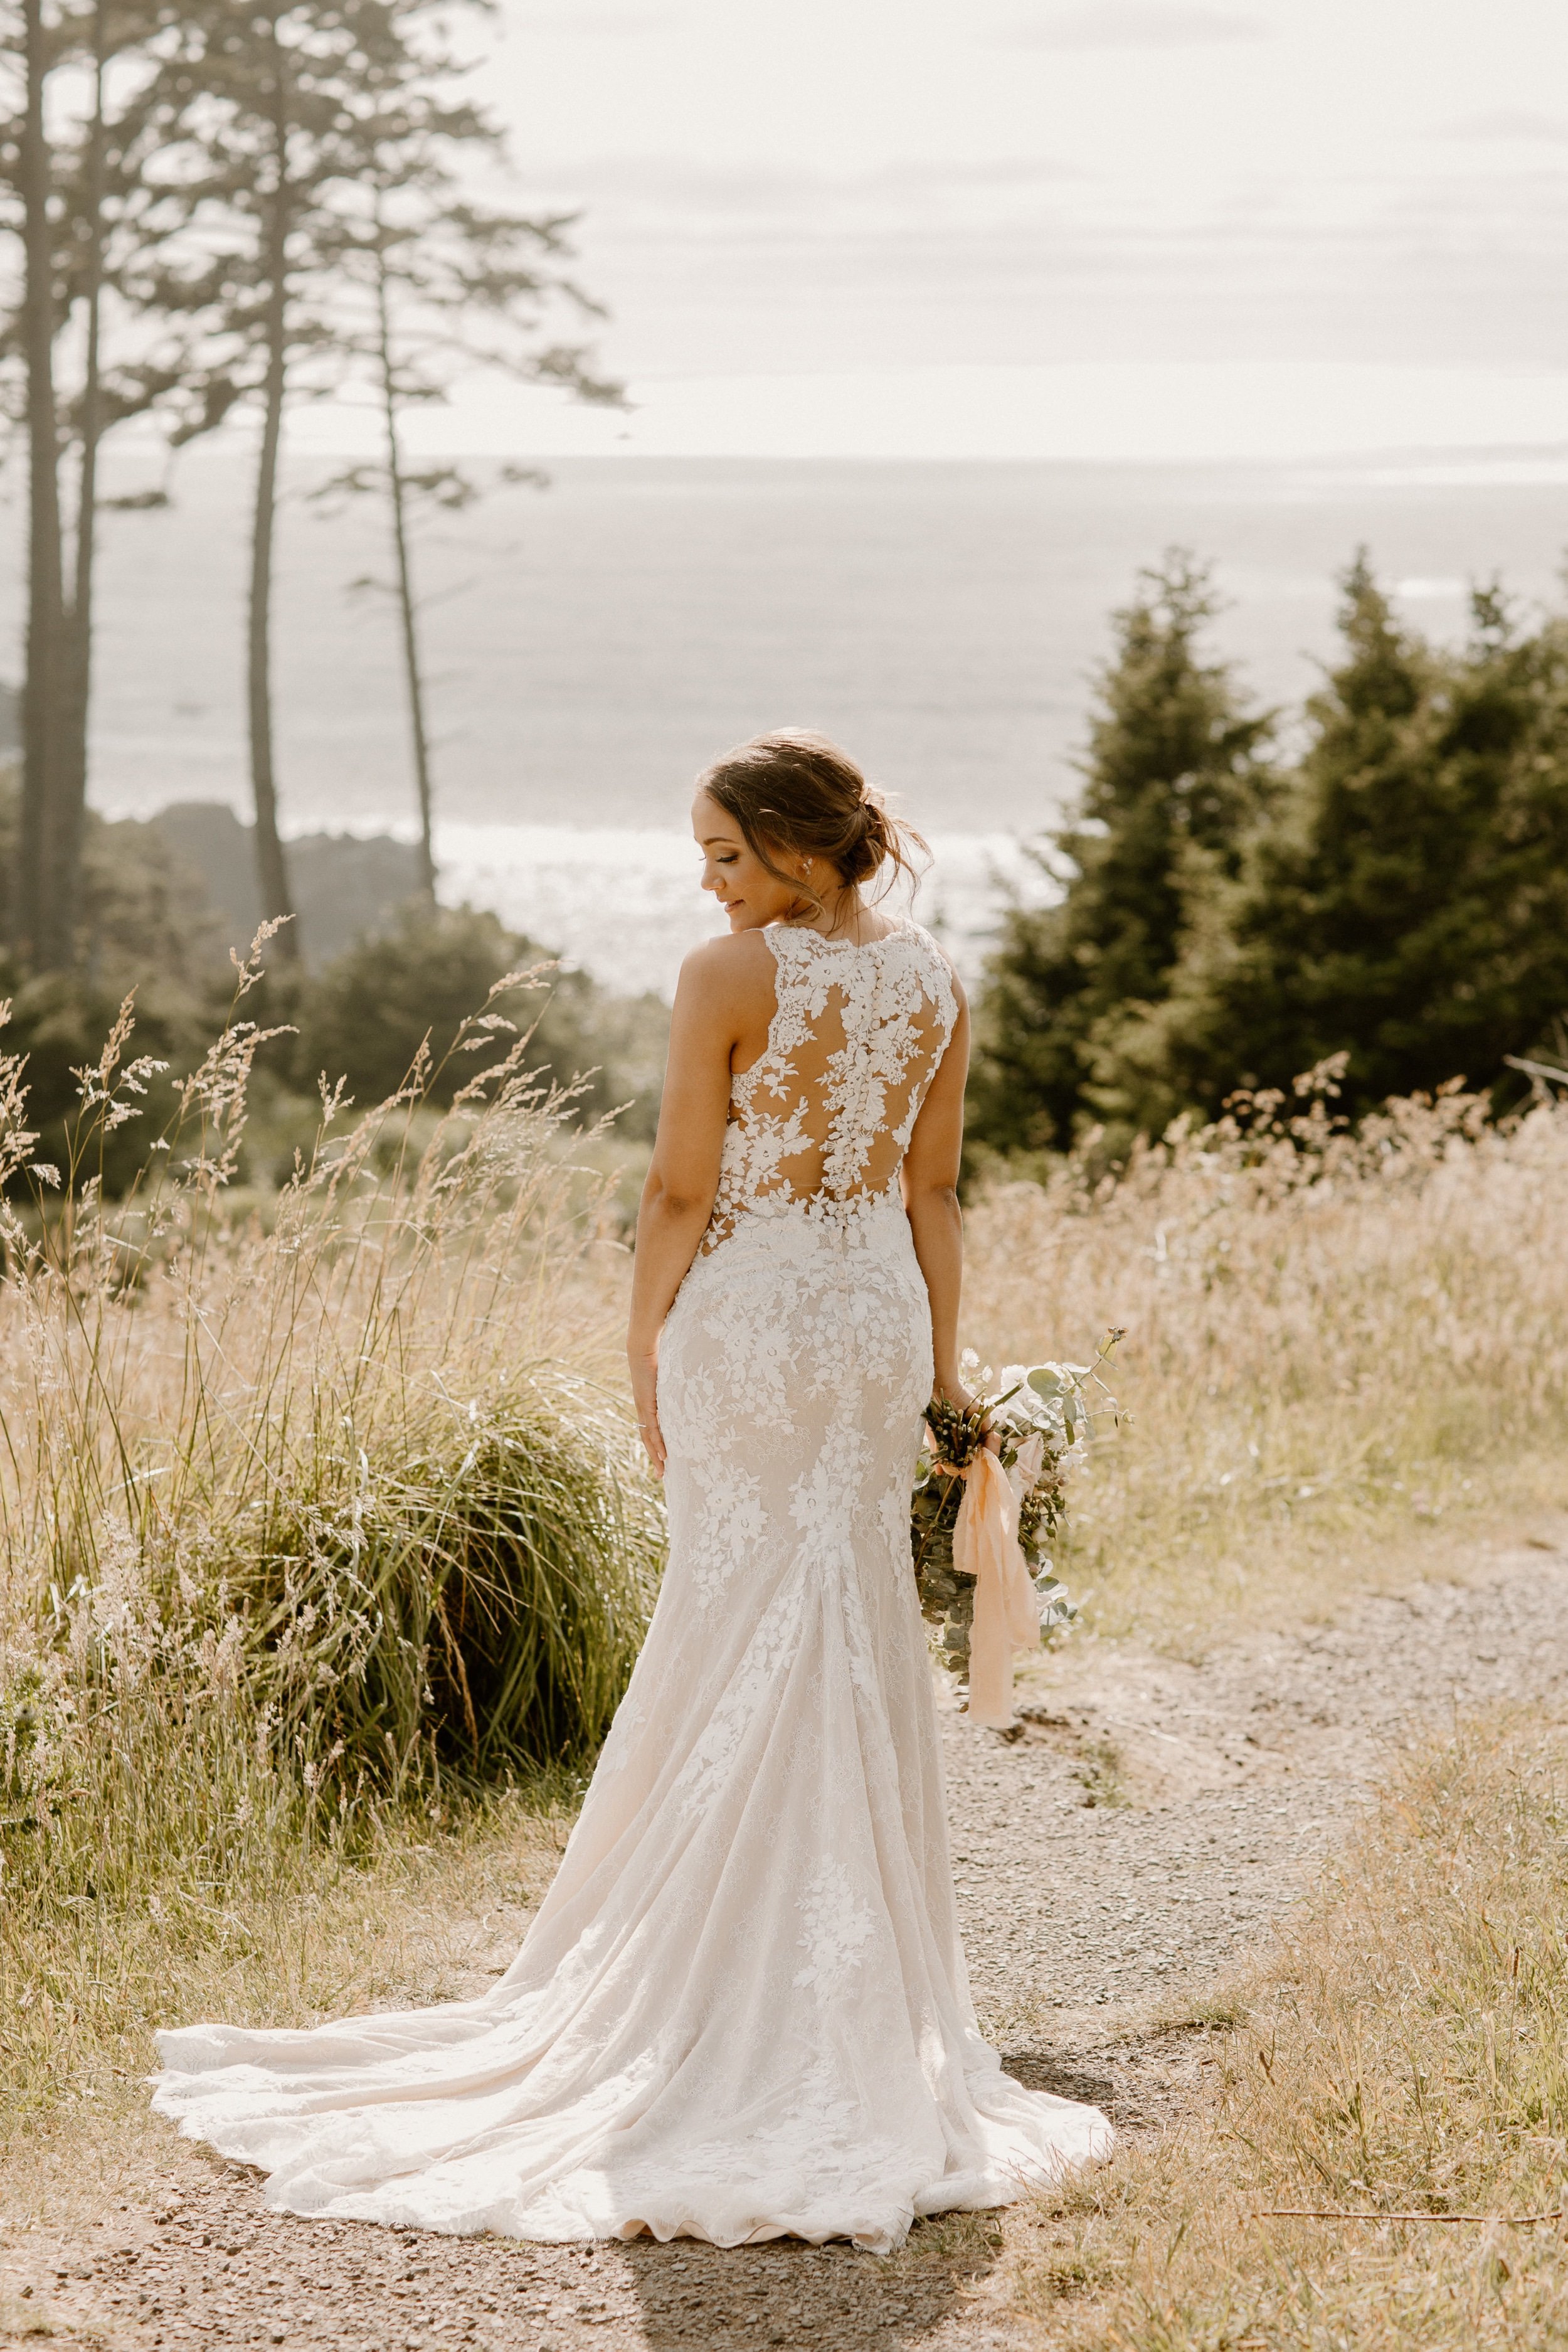 05_ginapaulson_deionnetrace-28_Cannon Beach Elopement Backless Wedding Dress .jpg